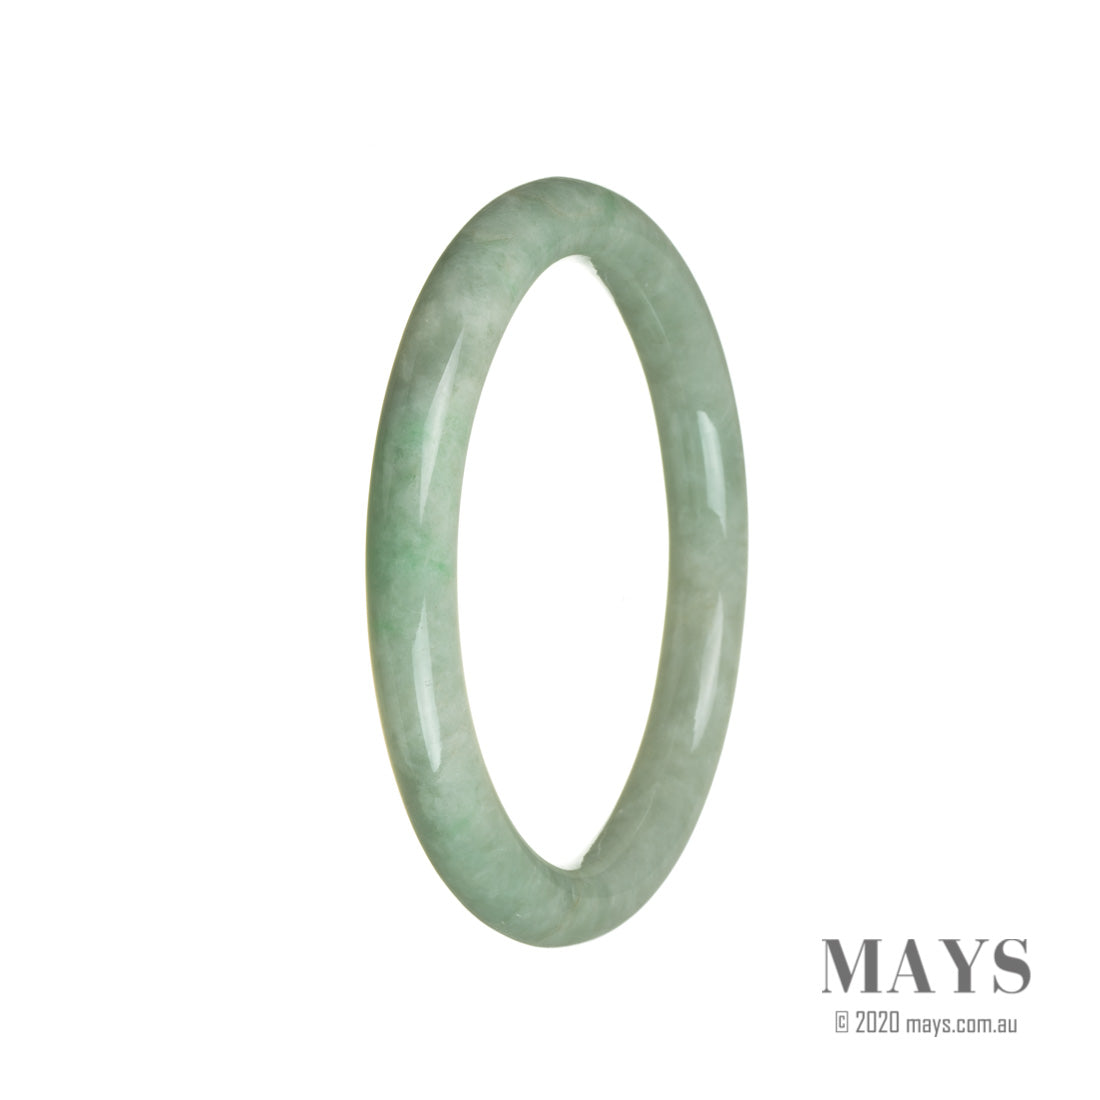 A round, 62mm genuine Grade A Green Burma Jade Bangle by MAYS™.